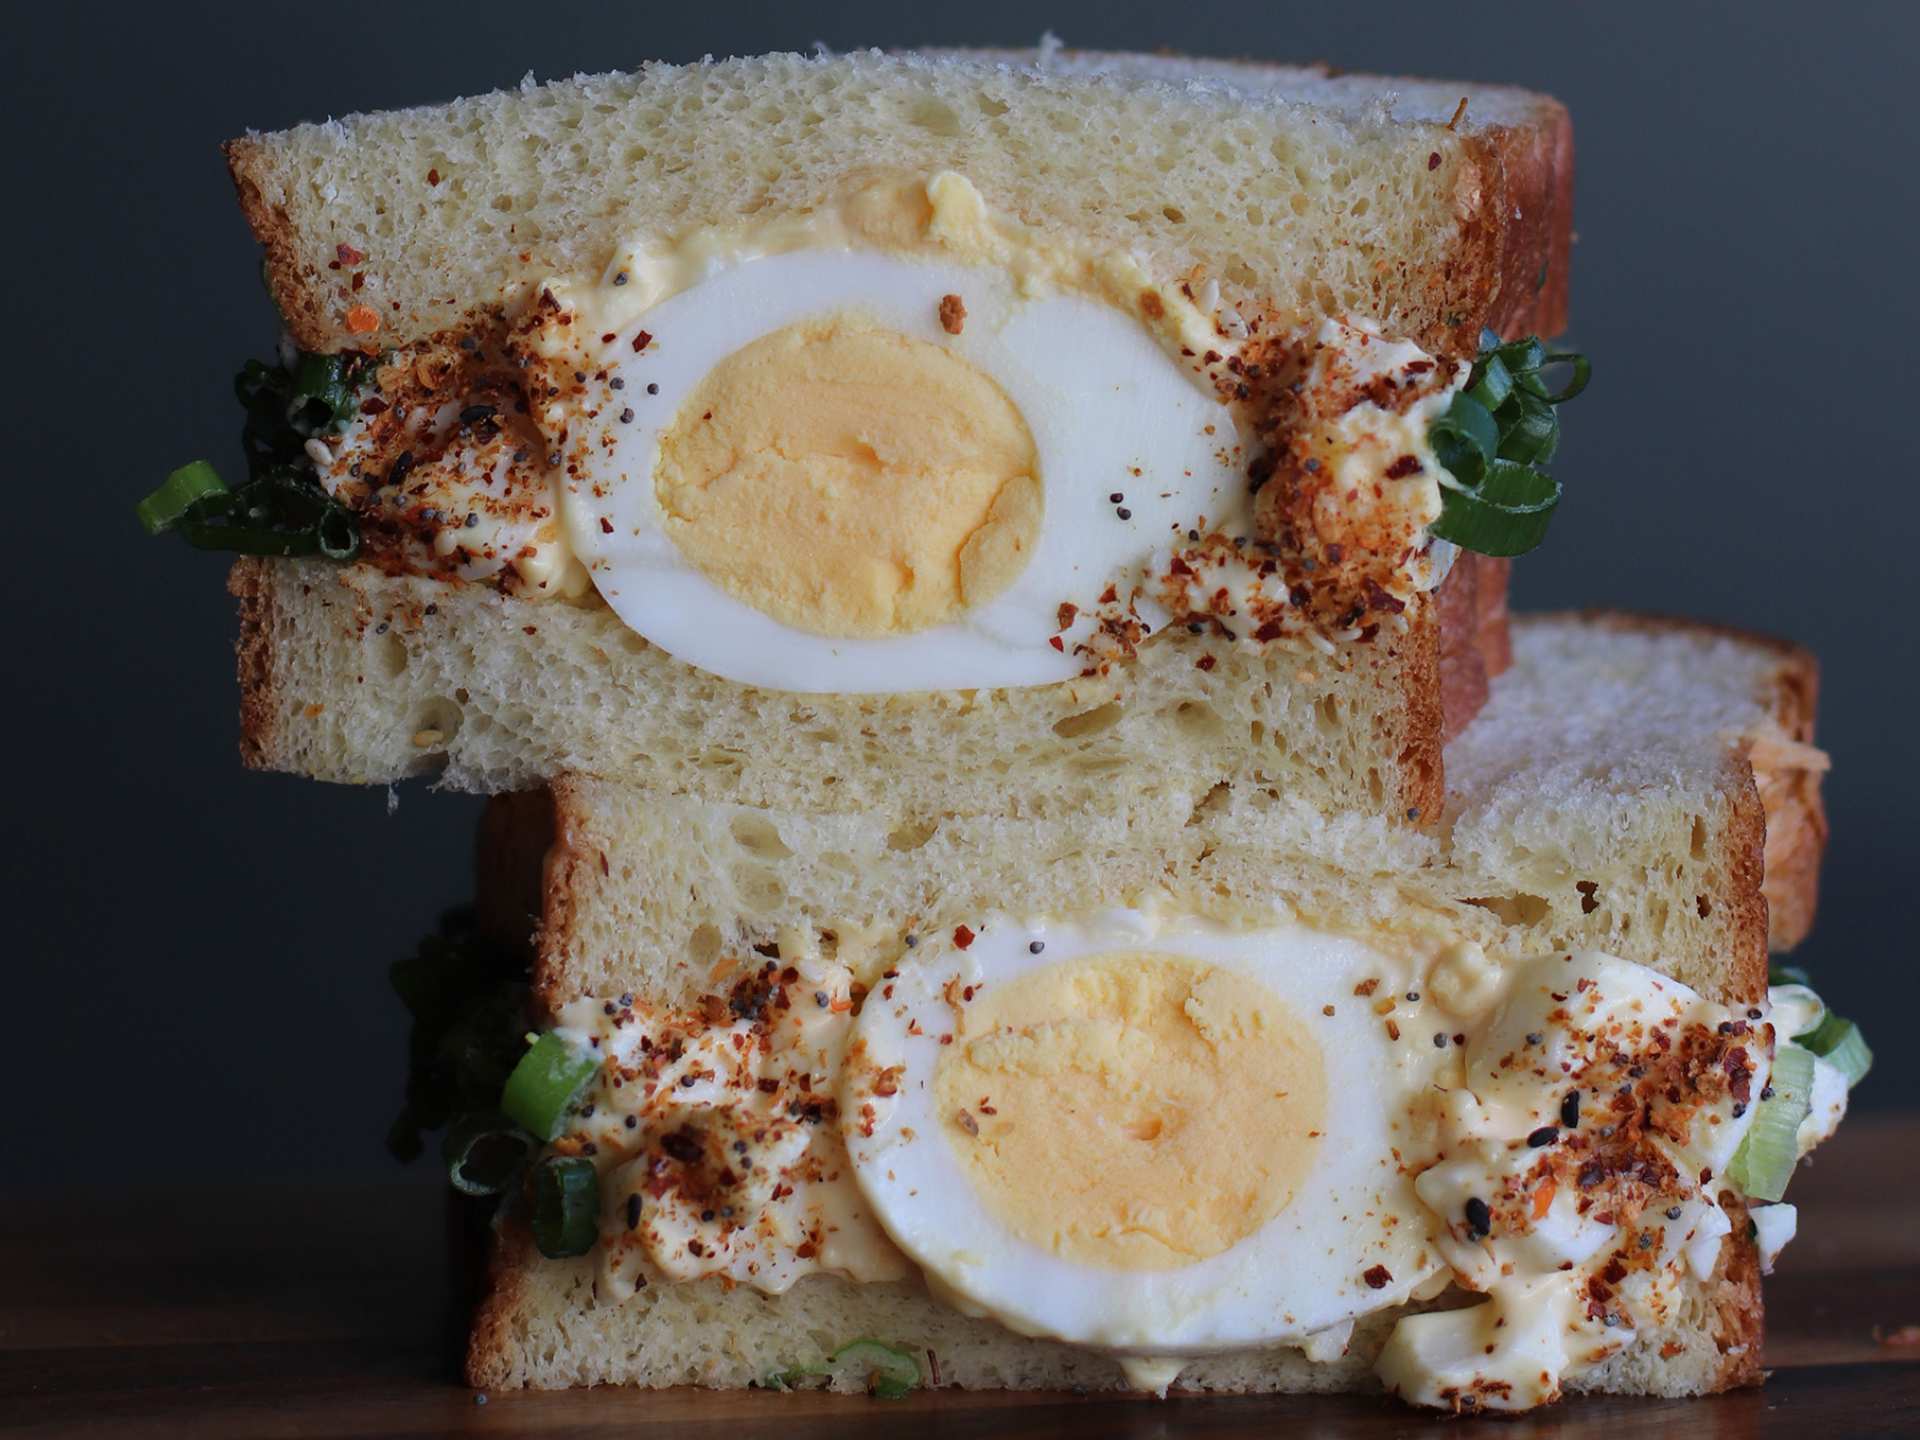 Best new restaurants Toronto | Two egg sandwiches at Leslie's Sandwich Room